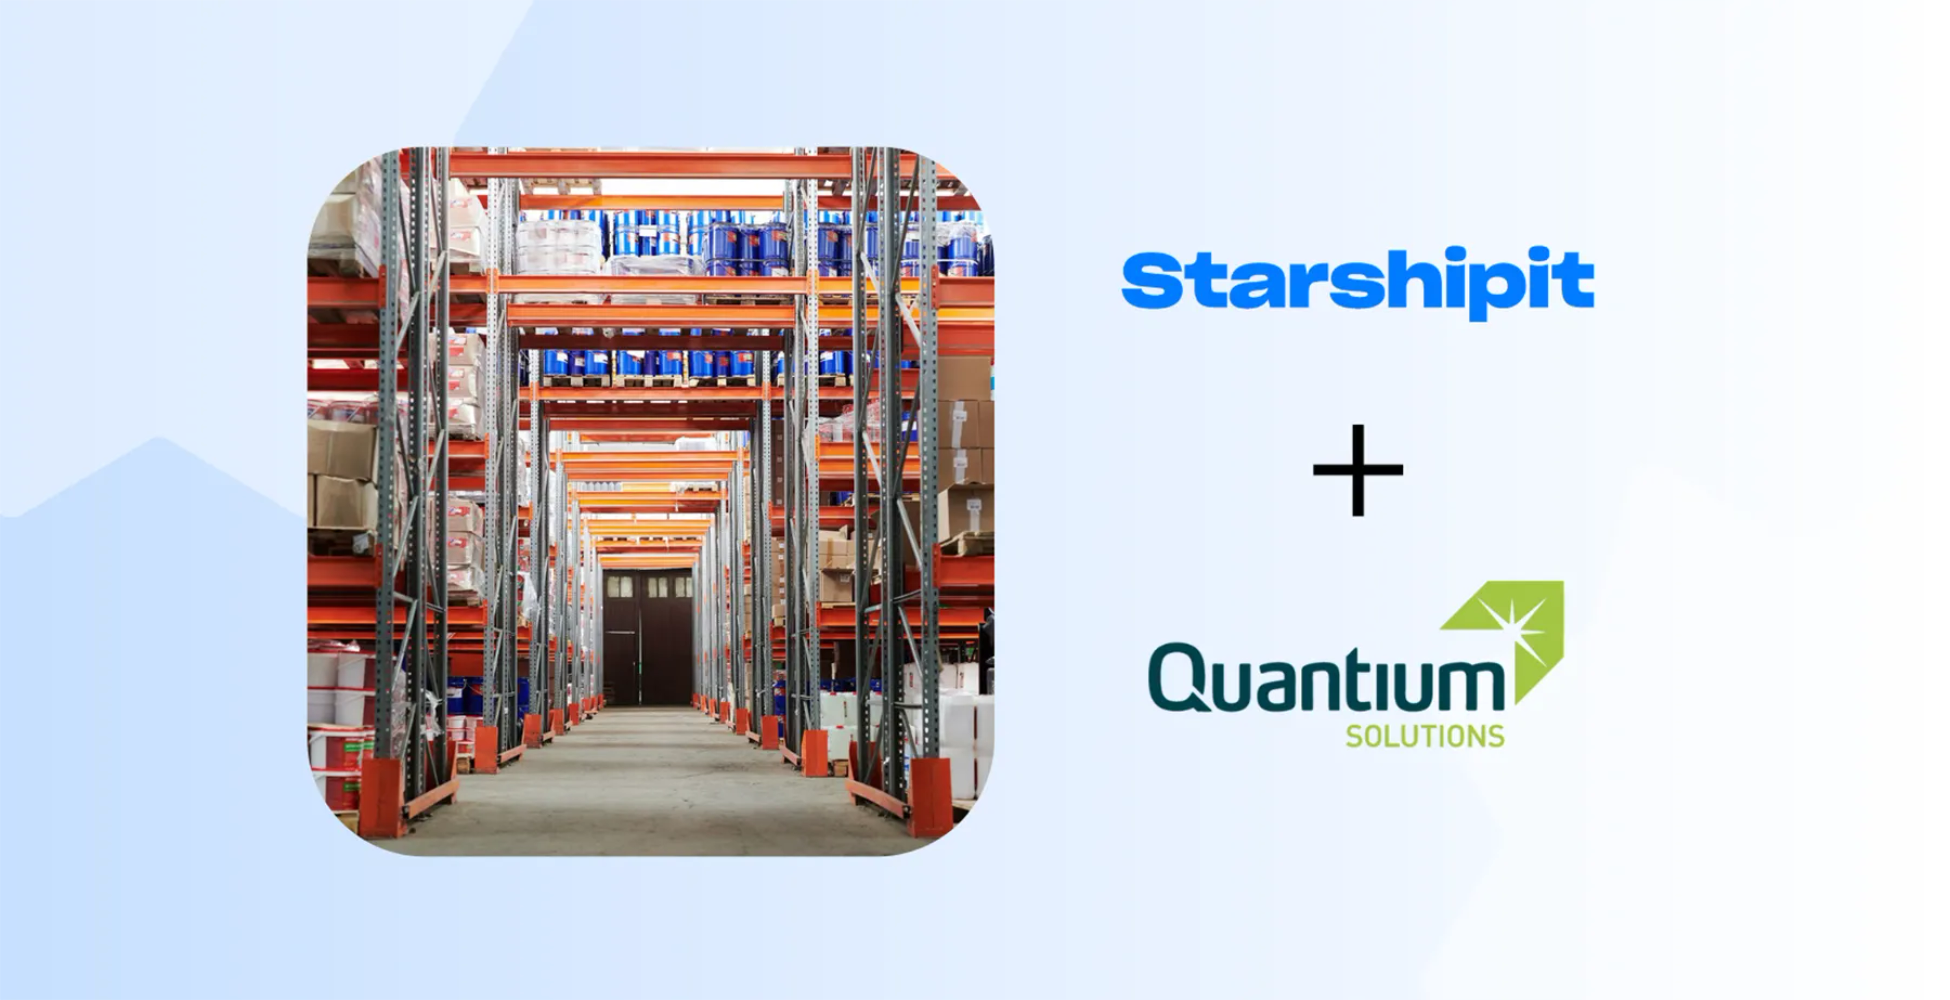 Starshipit and Quantium Solutions case study